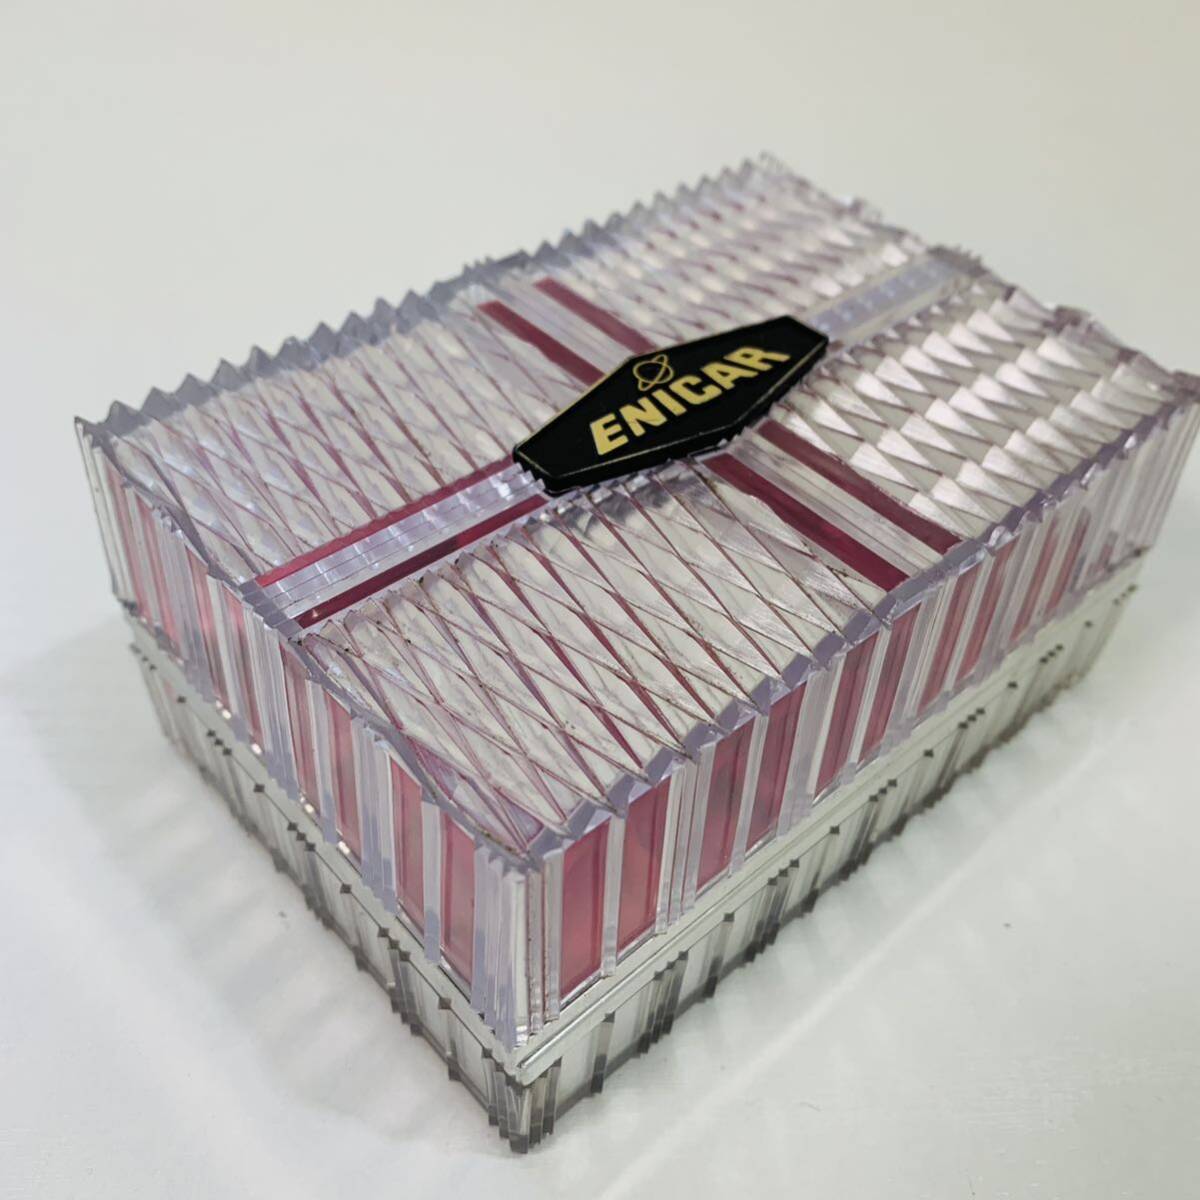 ENICAR エニカ 腕時計 ケース ボックス 空箱 ウォッチケース クリア ピンク ロゴ 12.5cmX8.5cmX6cm 未使用の画像2